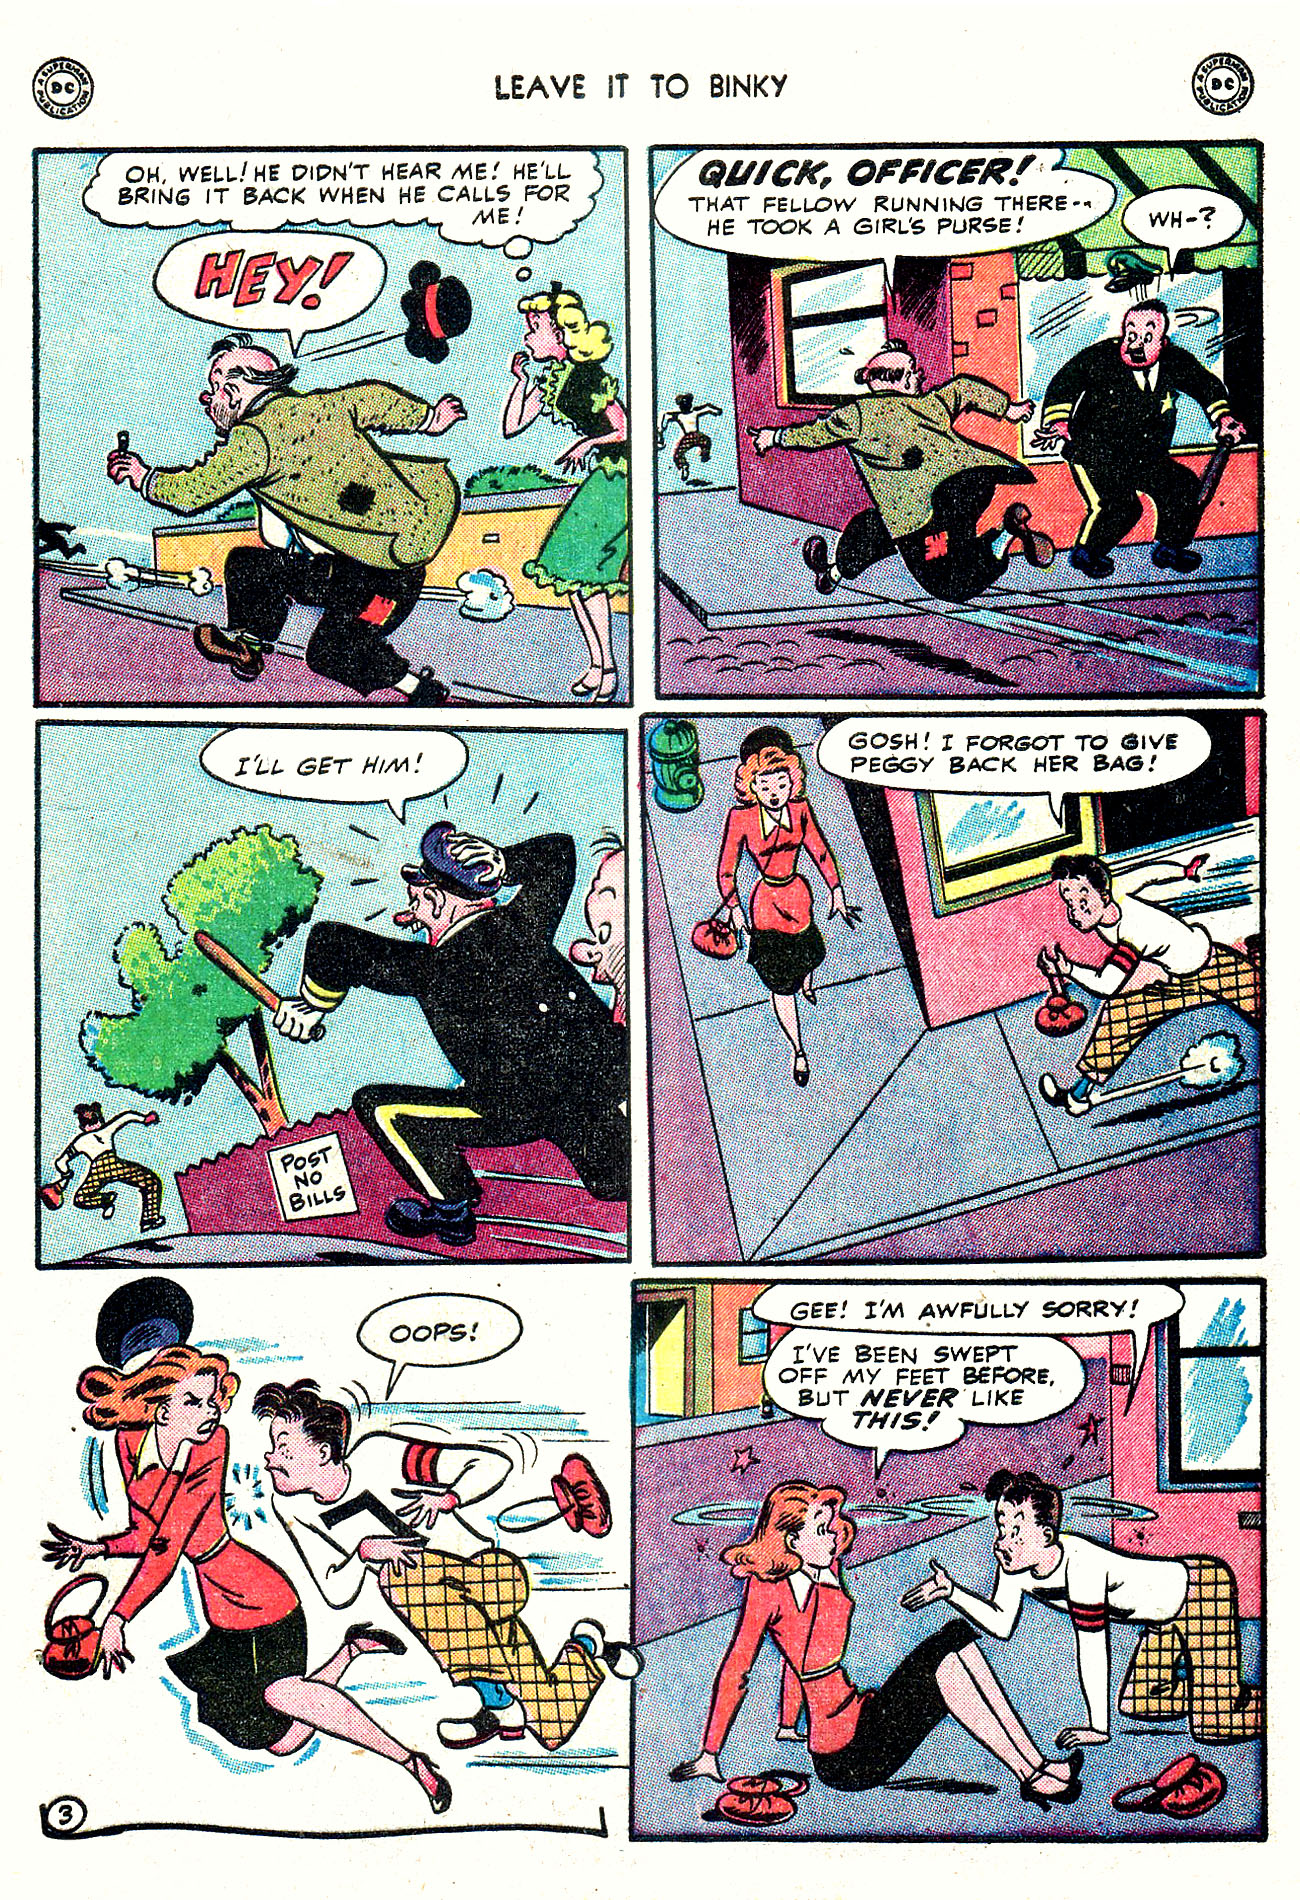 Read online Leave it to Binky comic -  Issue #6 - 5